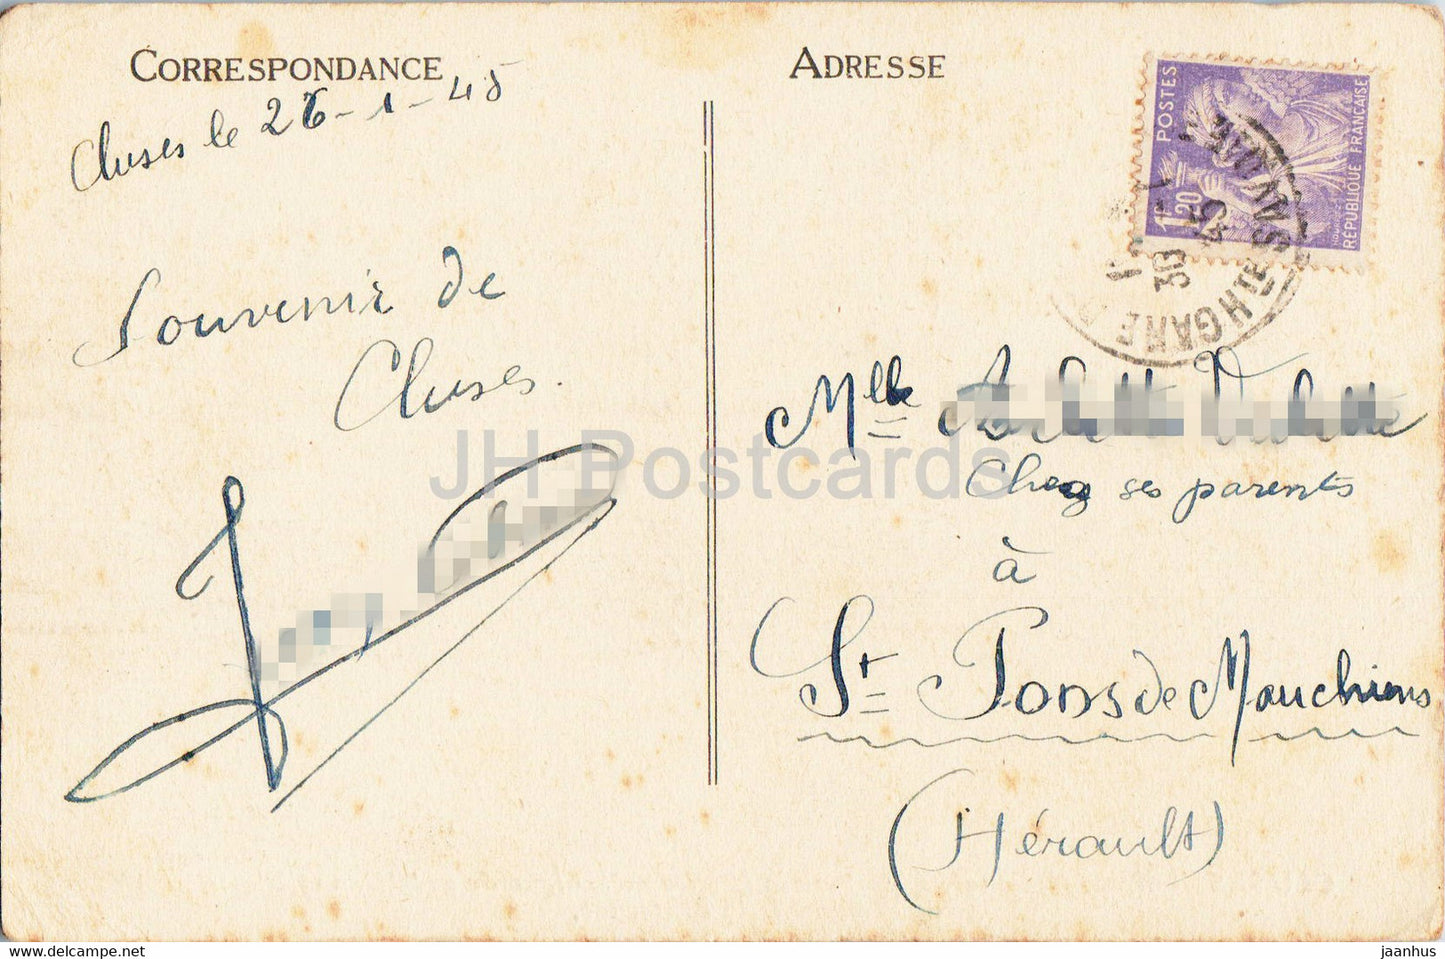 Cluses - Ecole Nationale d'Horlogerie - Batiment de l'Internat - old postcard - 1945 - France - used